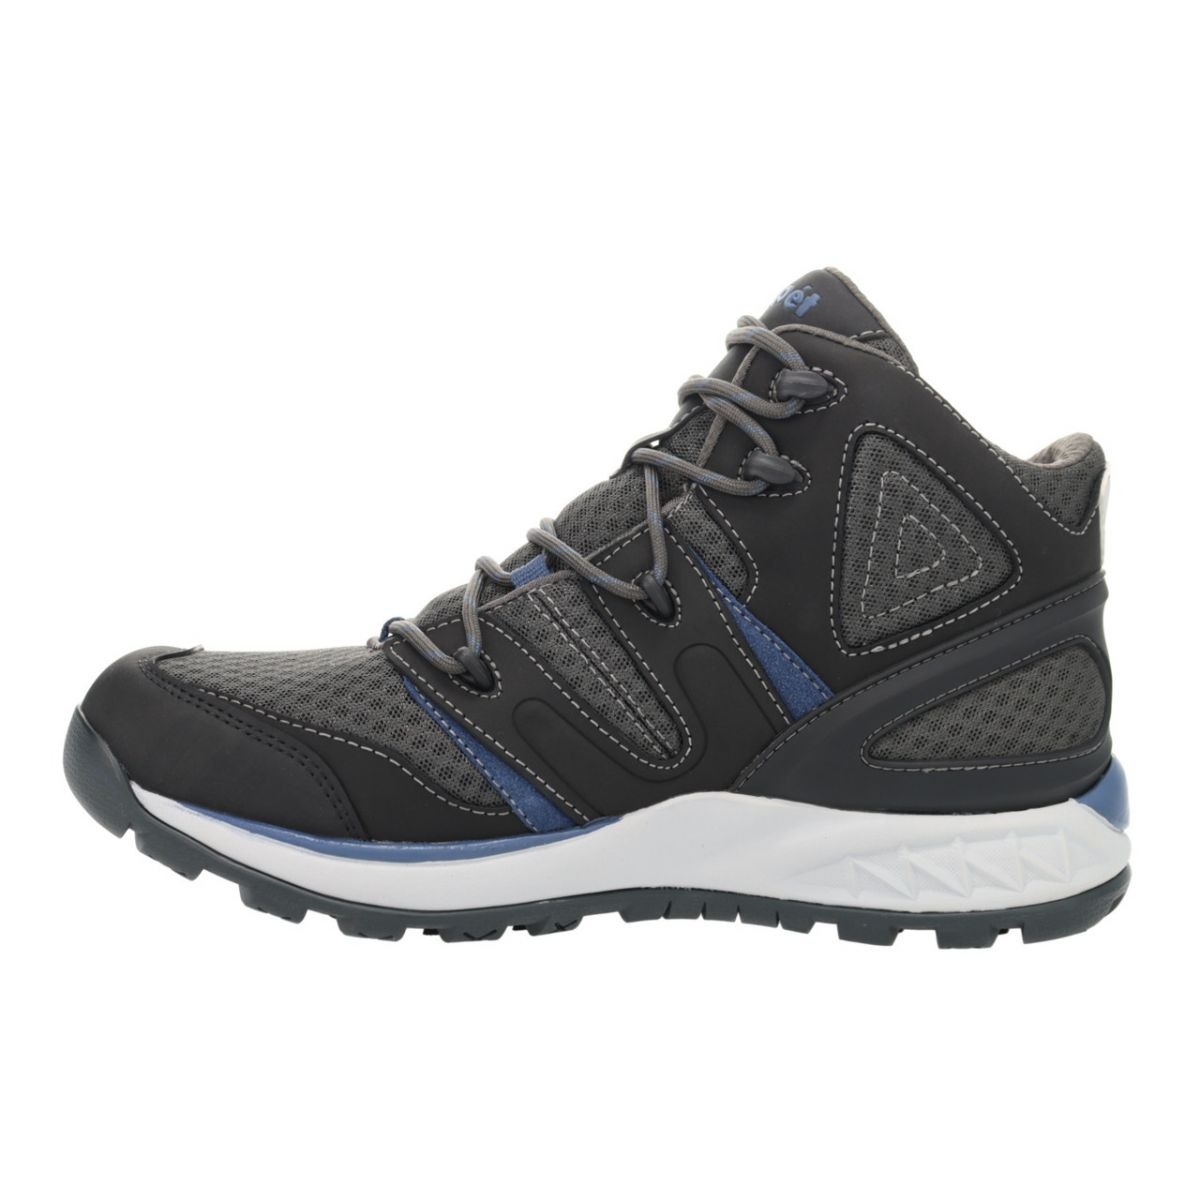 Propet Men's Veymont Waterproof Hiking Boot Grey/Blue - MOA022SGRB GREY/BLUE - GREY/BLUE, 8 X-Wide